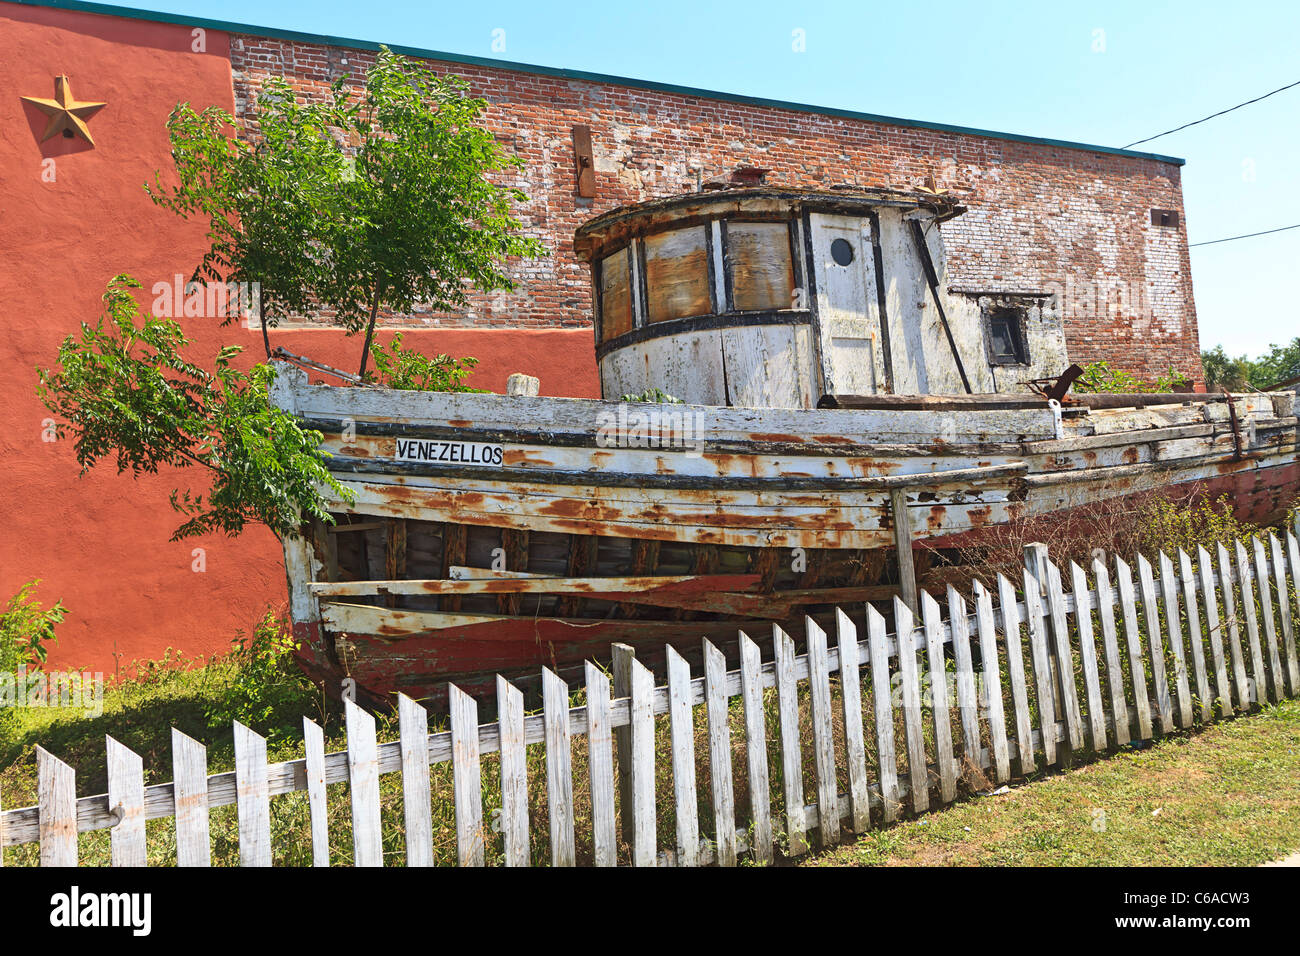 Old Greek fishing trawler boat on display on a street in Apalachicola, Florida Stock Photo